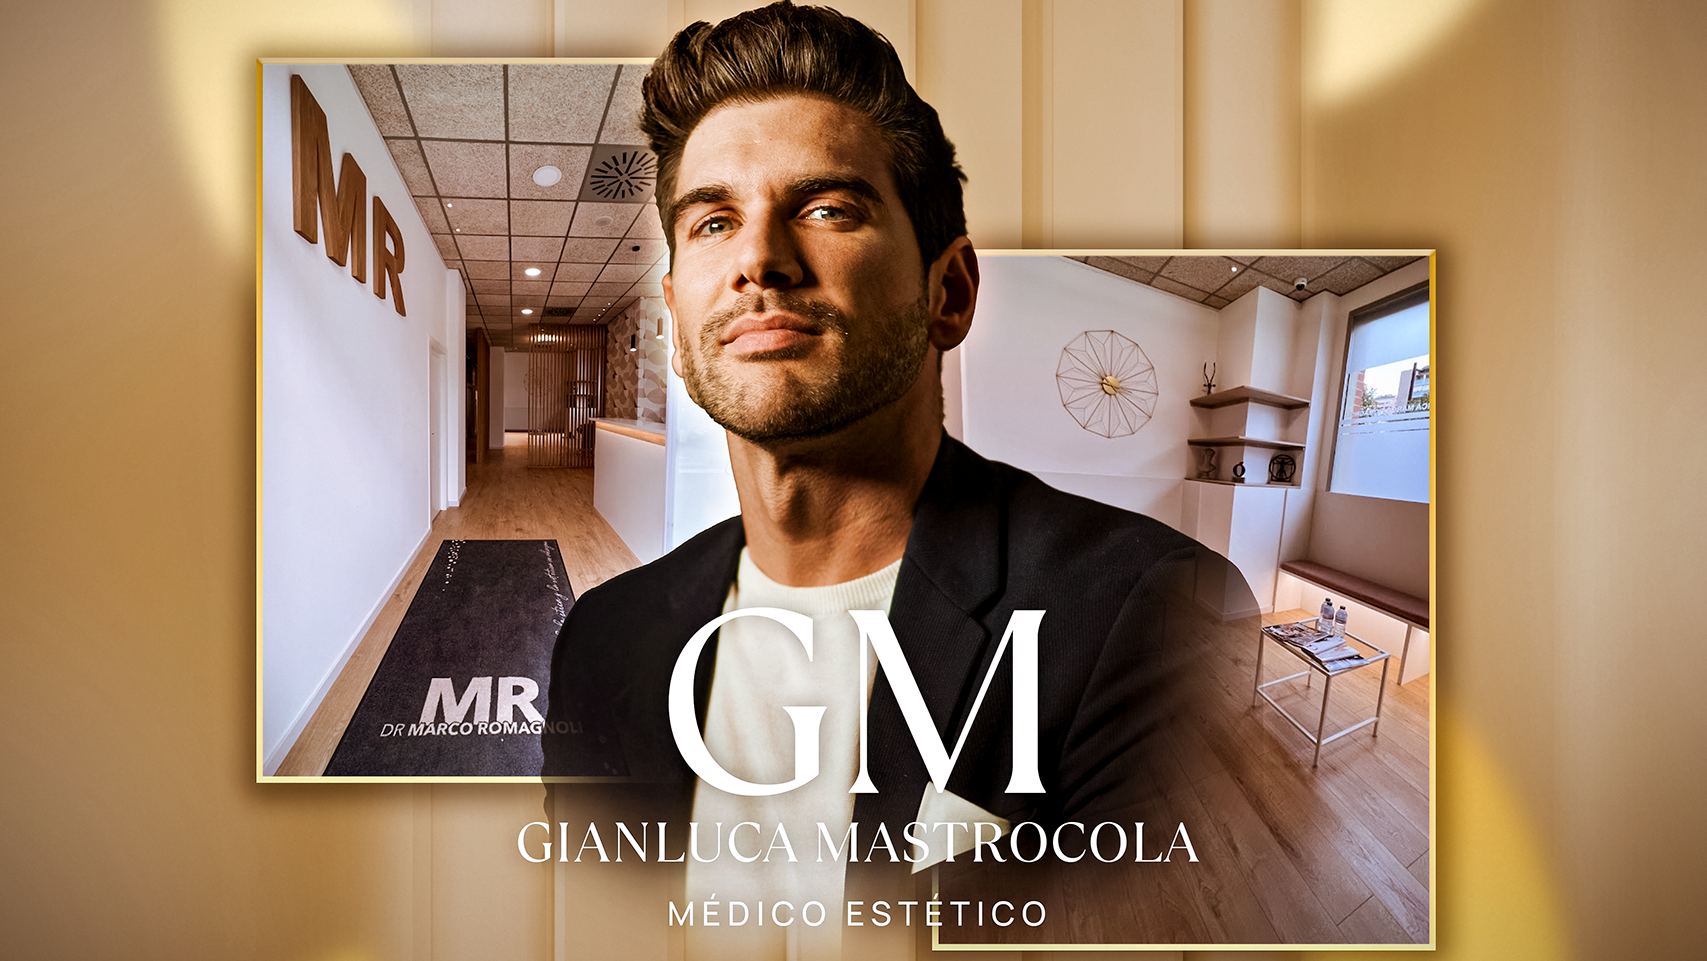 Dr Gianluca Mastrocola Clinica Dr Marco Romagnoli Medicina Estetica Miss Mister RNB España Cover